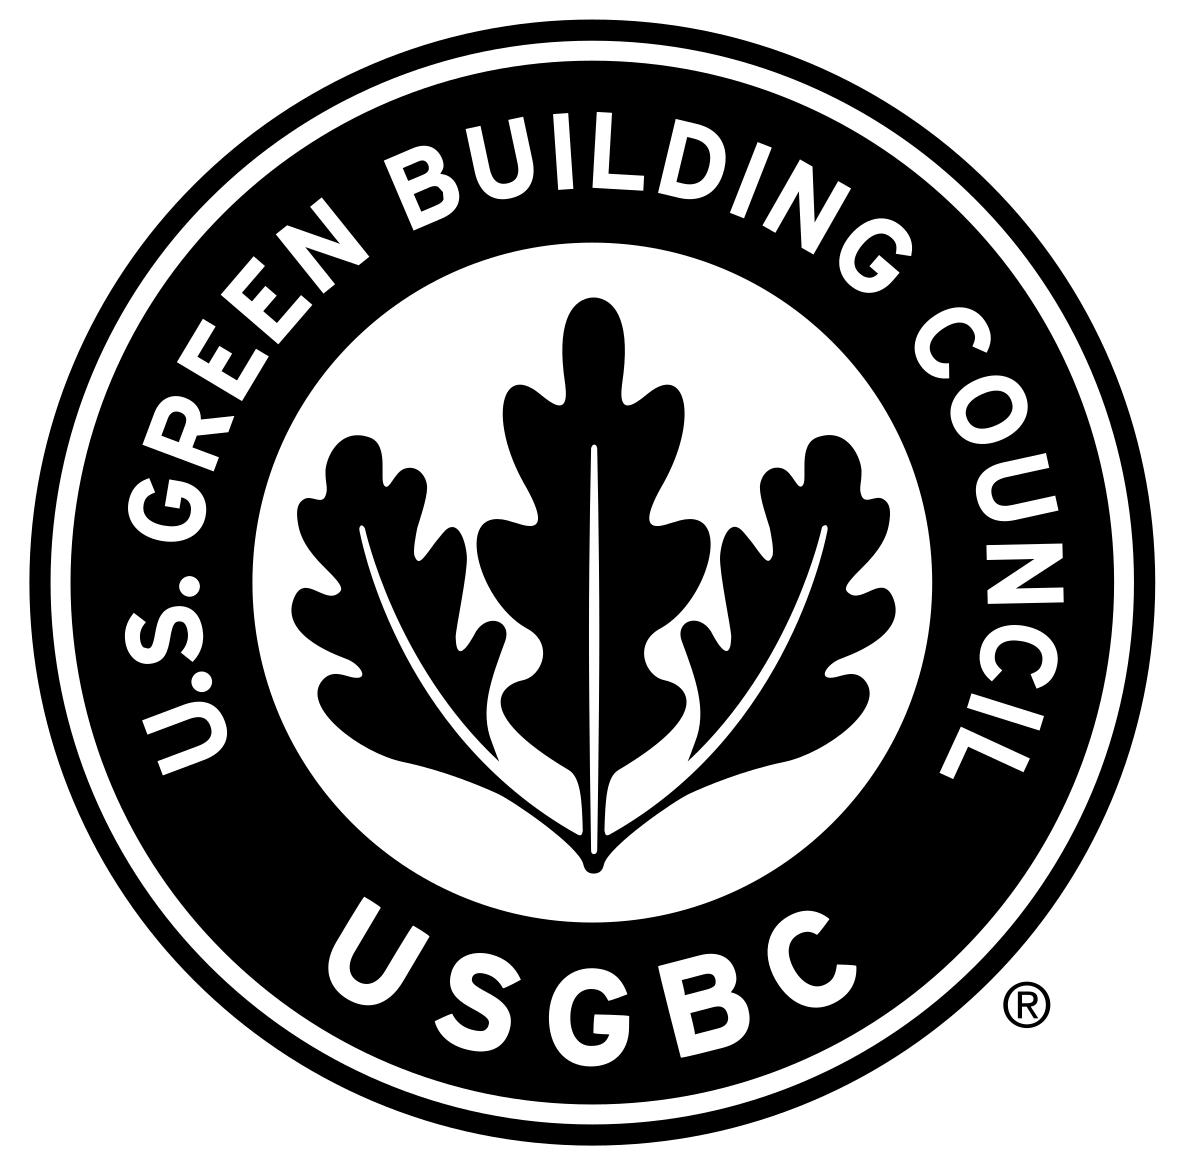 USGBC.png